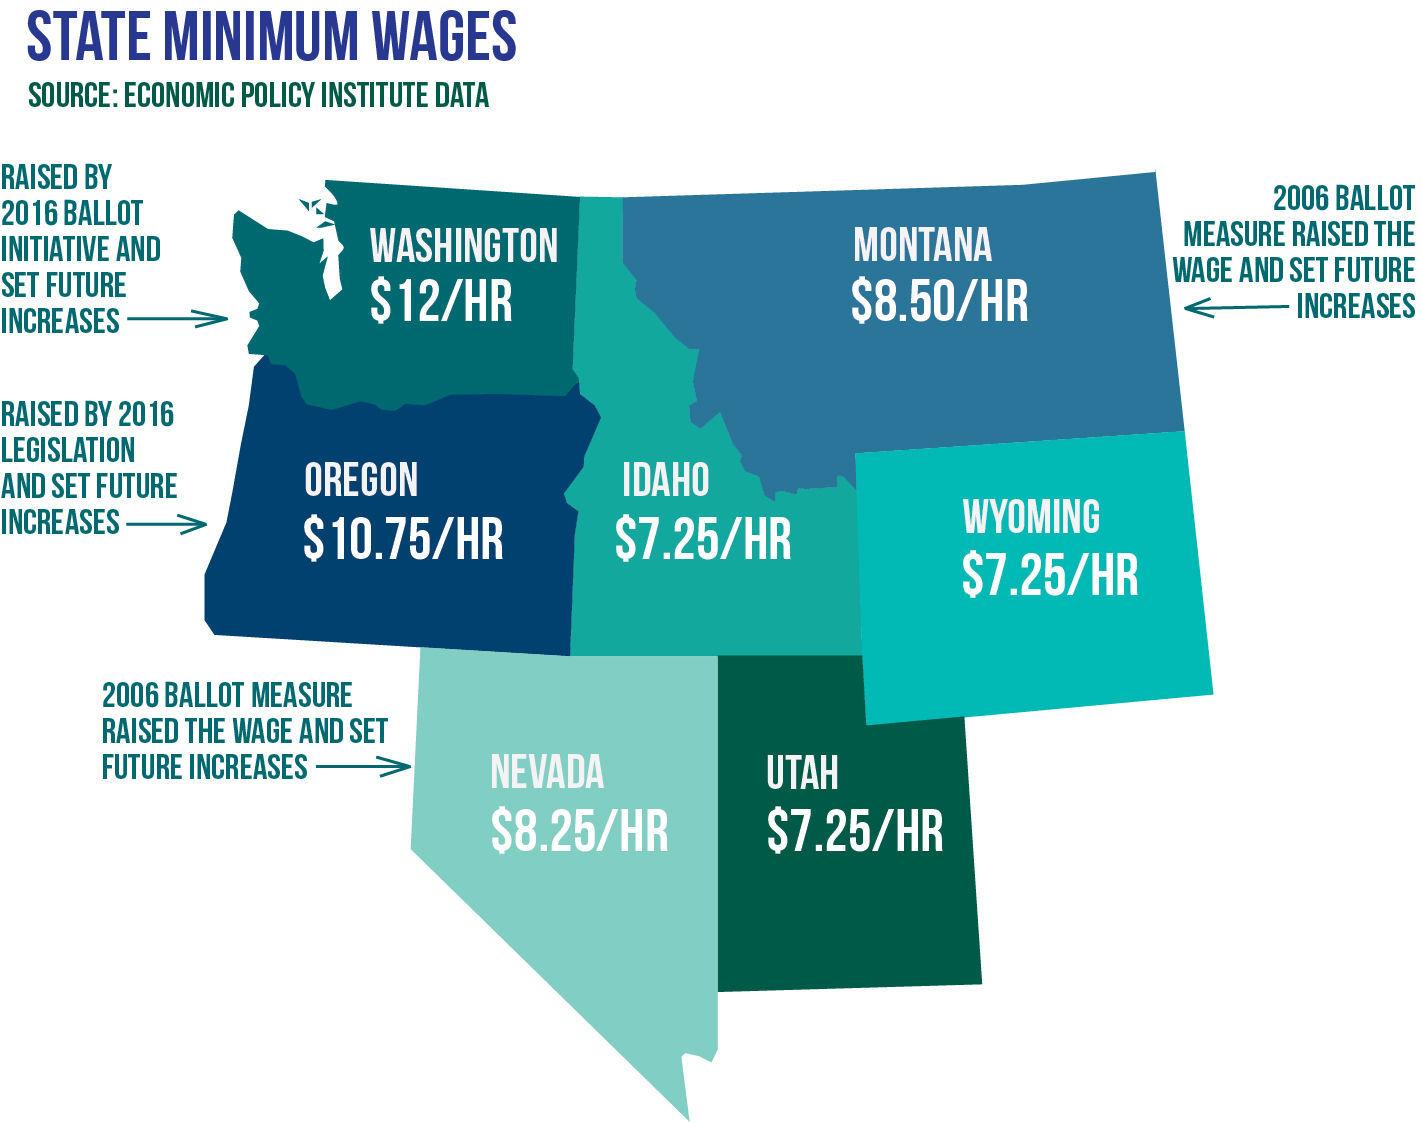 Idaho minimum wage falling farther behind, prompting ballot measure